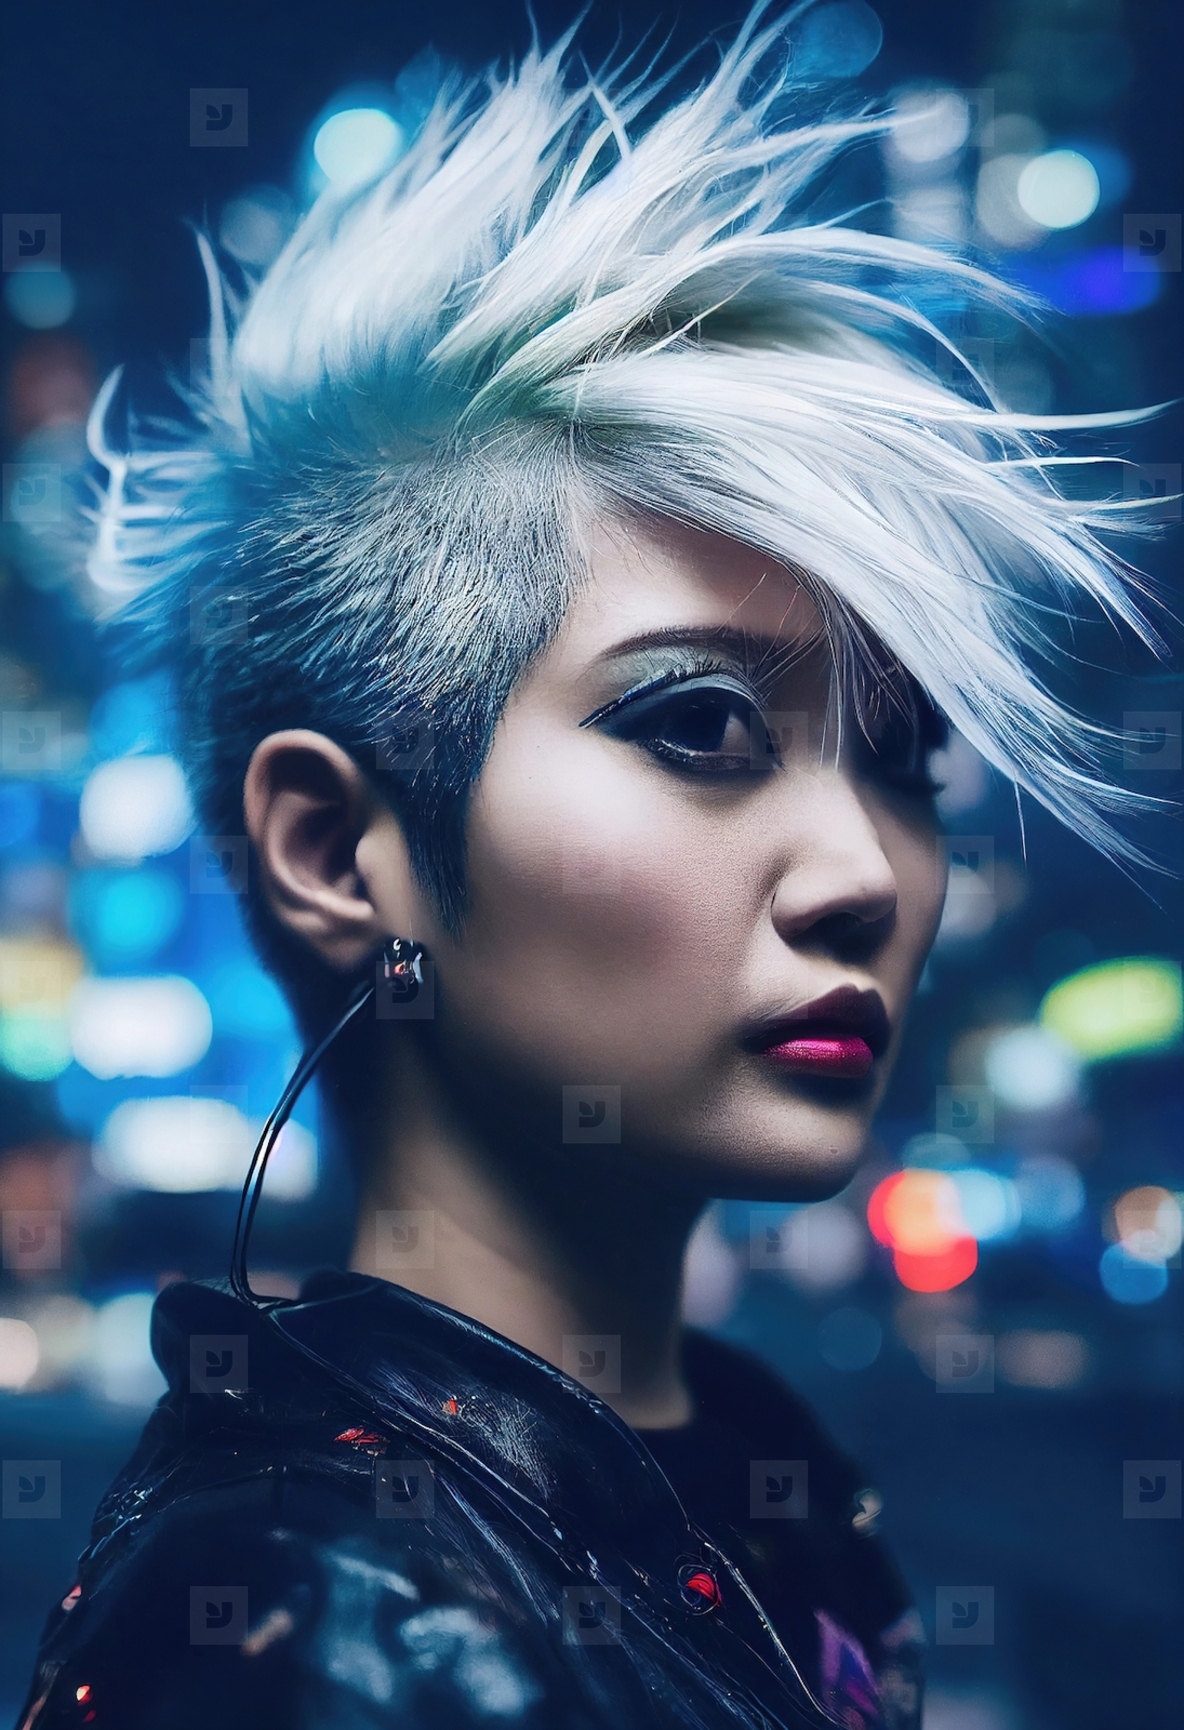 Female Cyberpunk Portrait 1